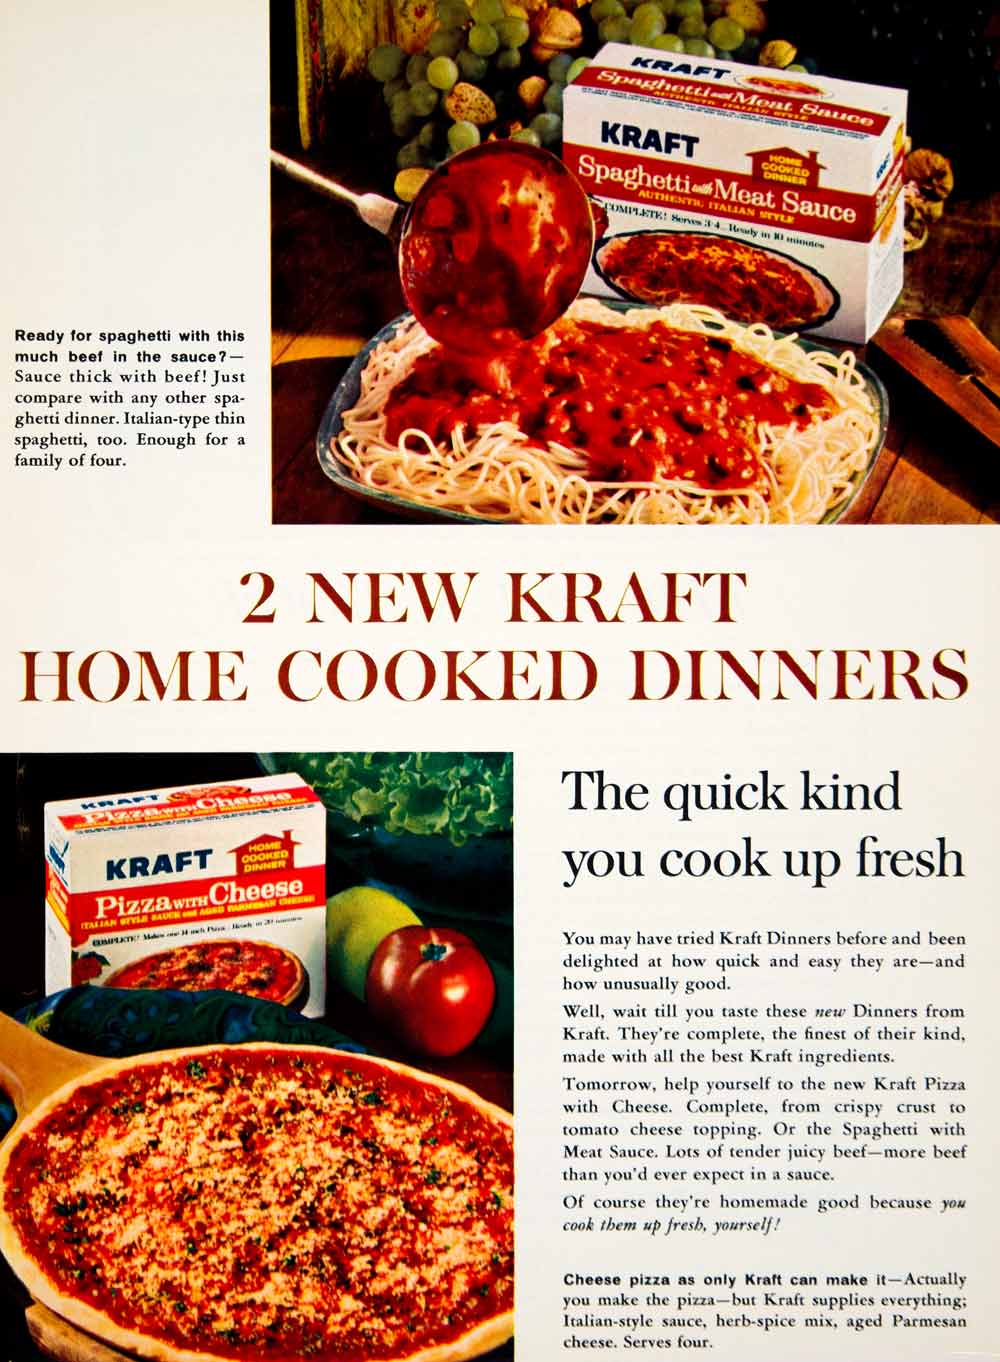 Vintage Kraft Velveeta Cheese Cube Cutter/Slicer Kitchen Tool Advertising